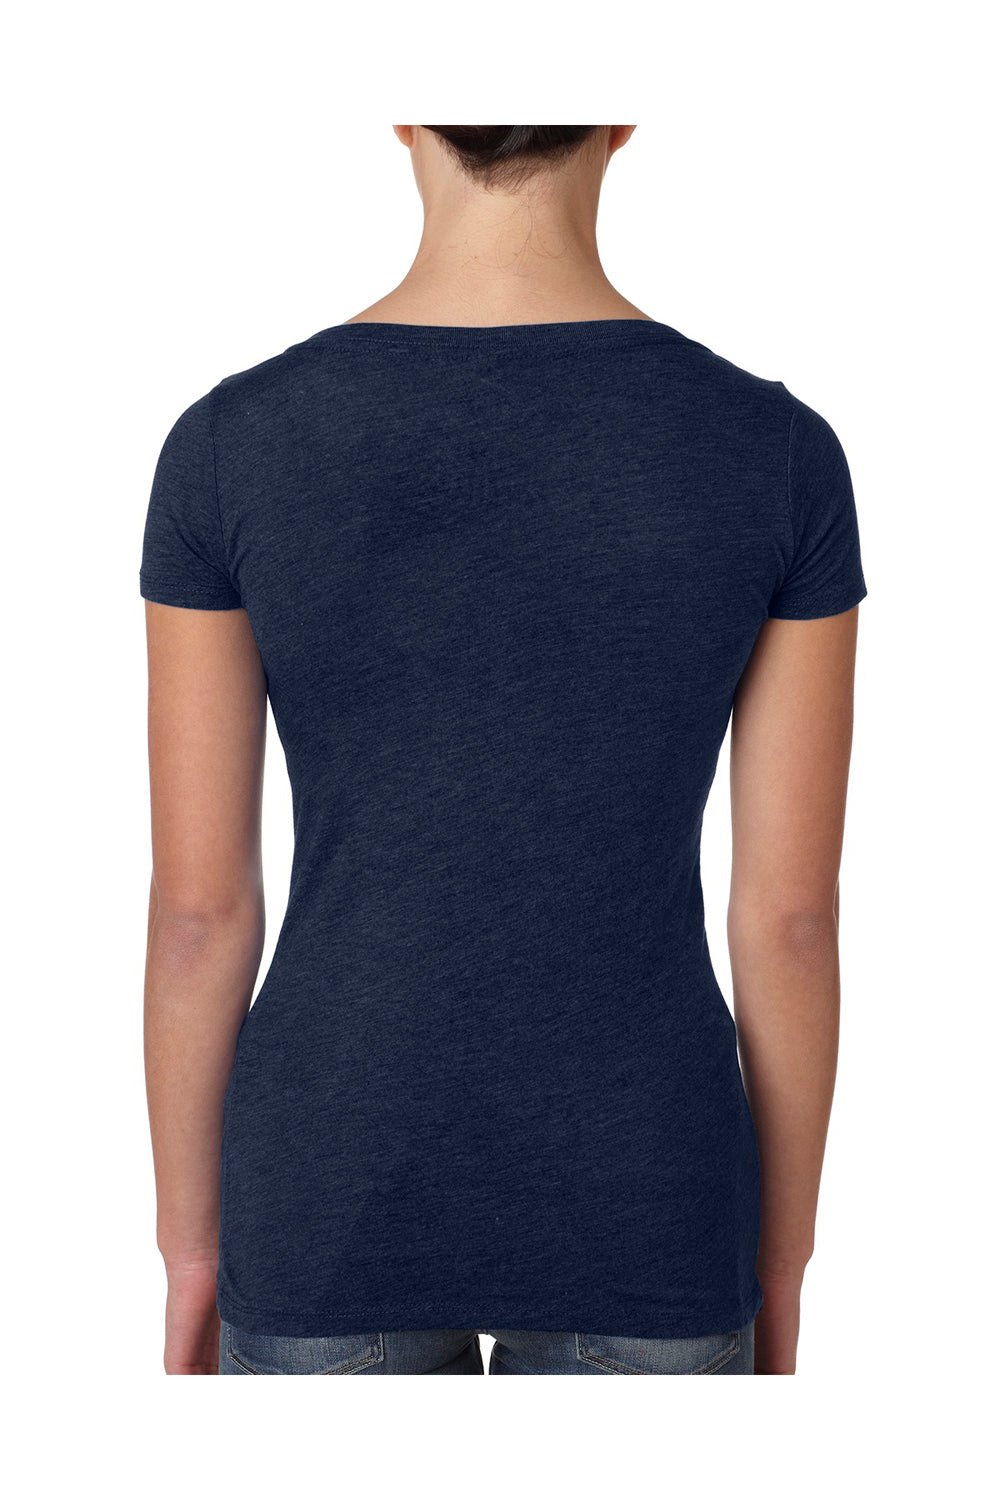 Next Level 6730 Womens Jersey Short Sleeve Scoop Neck T-Shirt Navy Blue Back